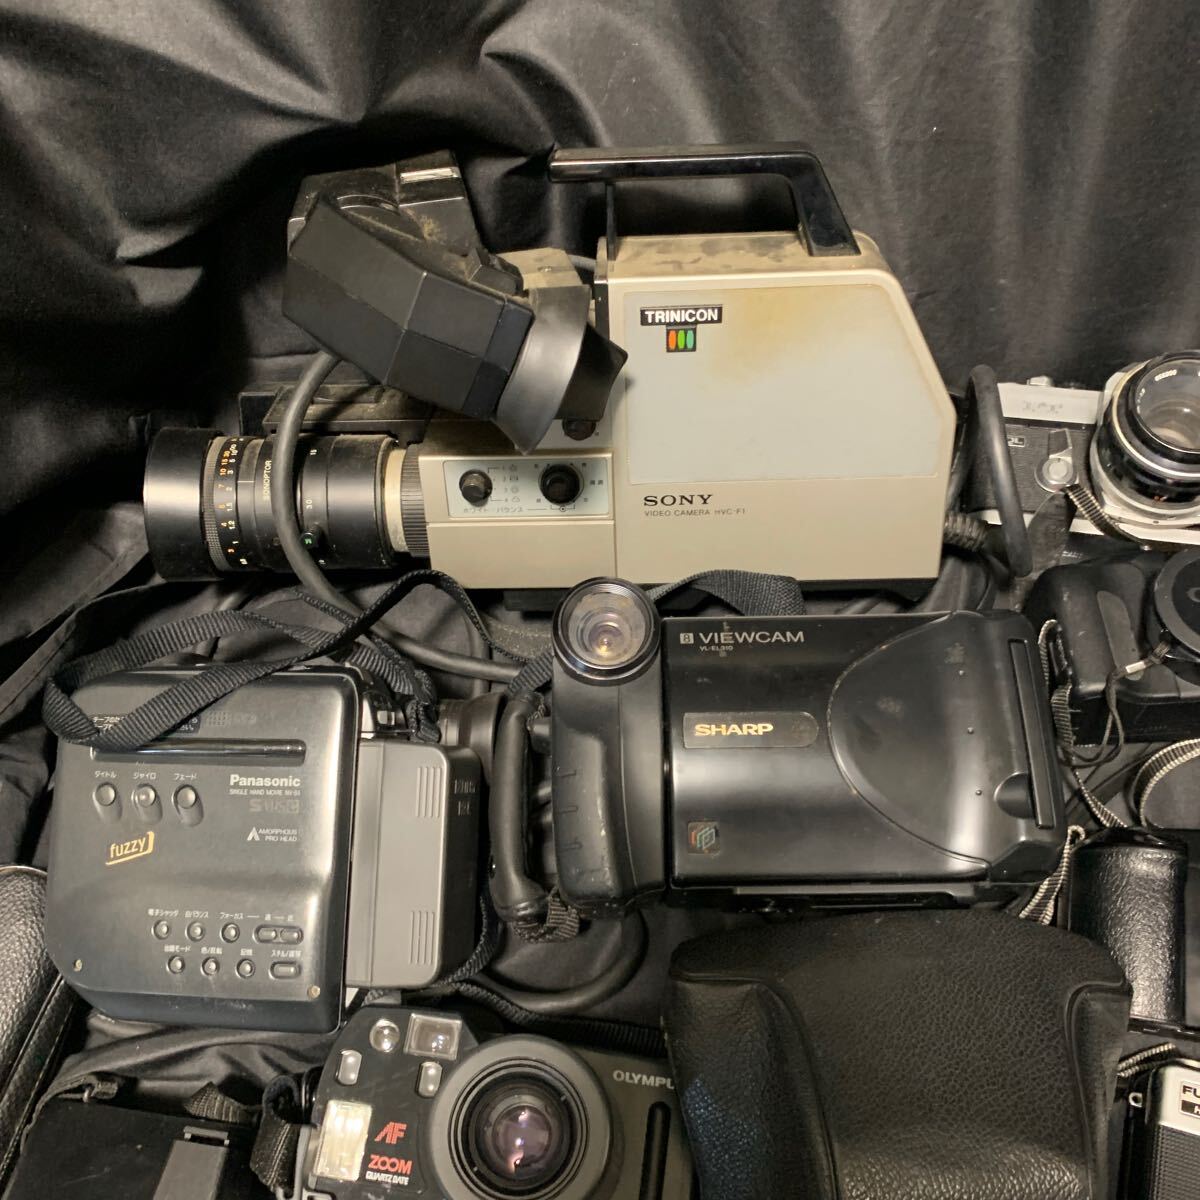  camera summarize video camera film camera lens etc. Canon OLYMPUS MINOLTA Nikon SONY other retro camera single‐lens reflex compact camera 